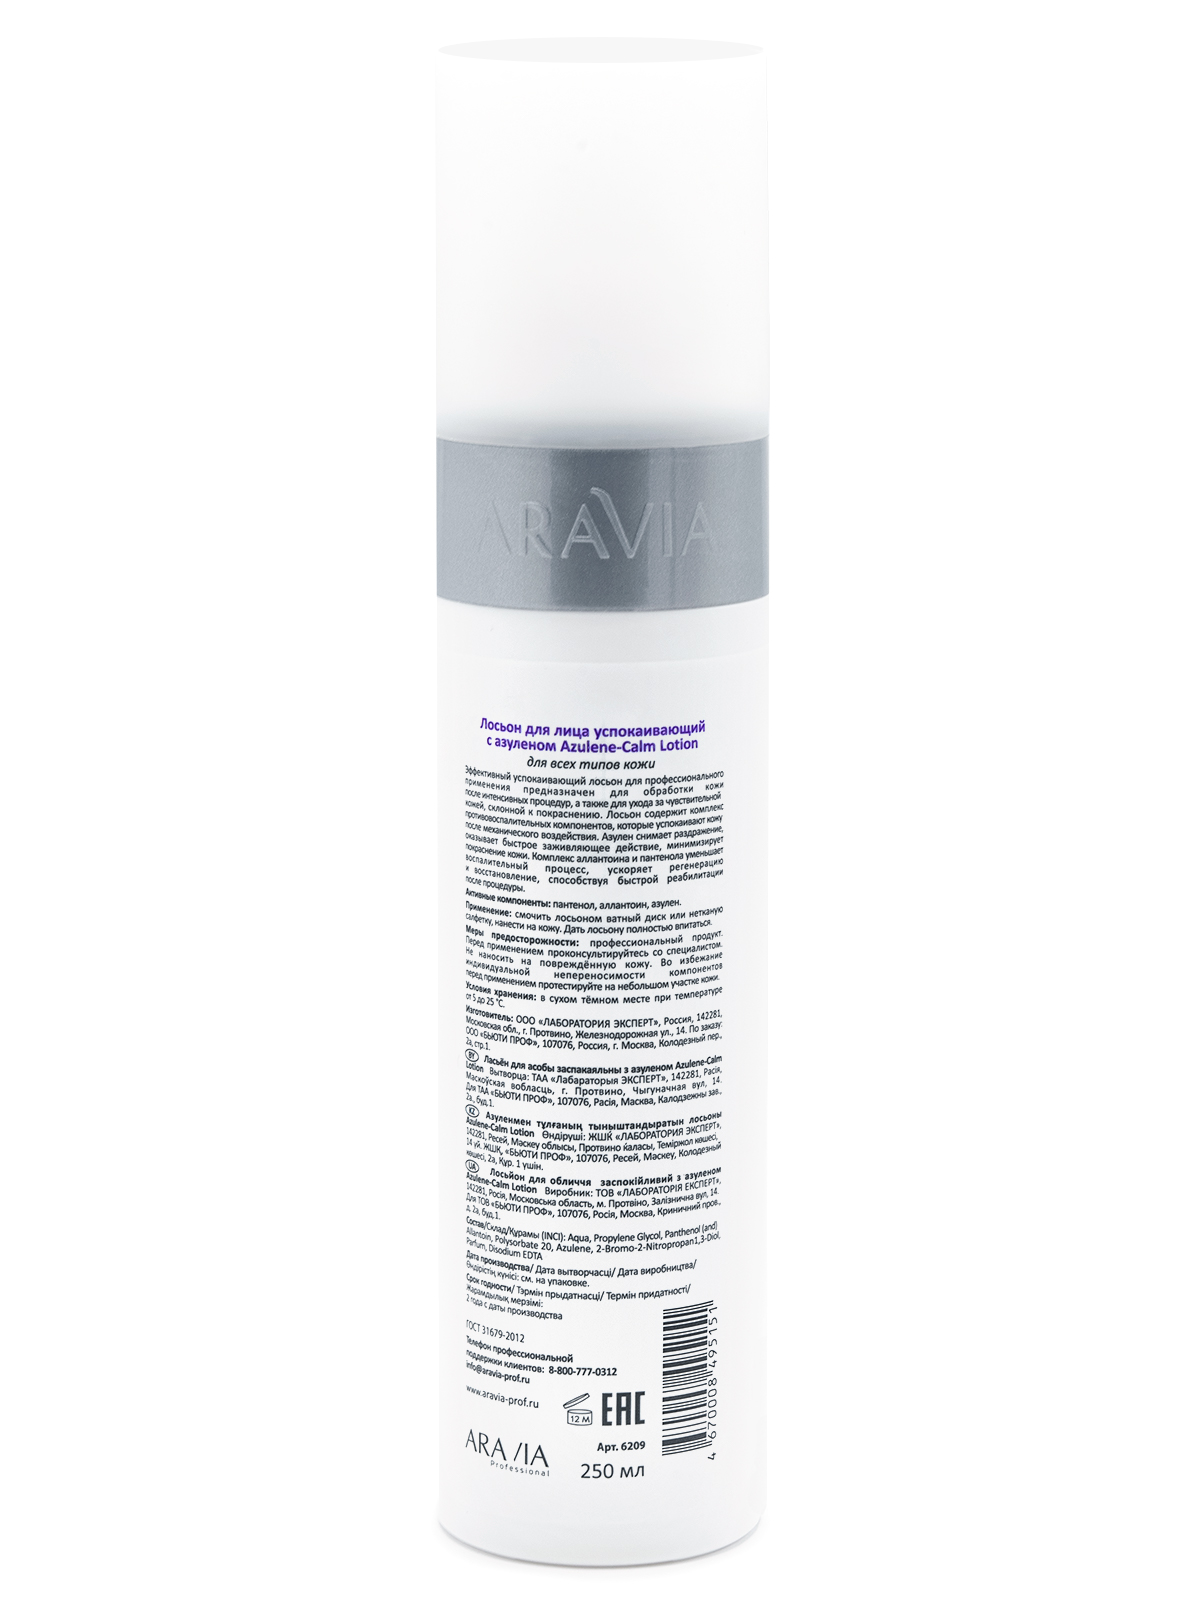 Лосьон для лица успокаивающий с азуленом Azulene-Calm Lotion, 250 мл, ARAVIA Professional